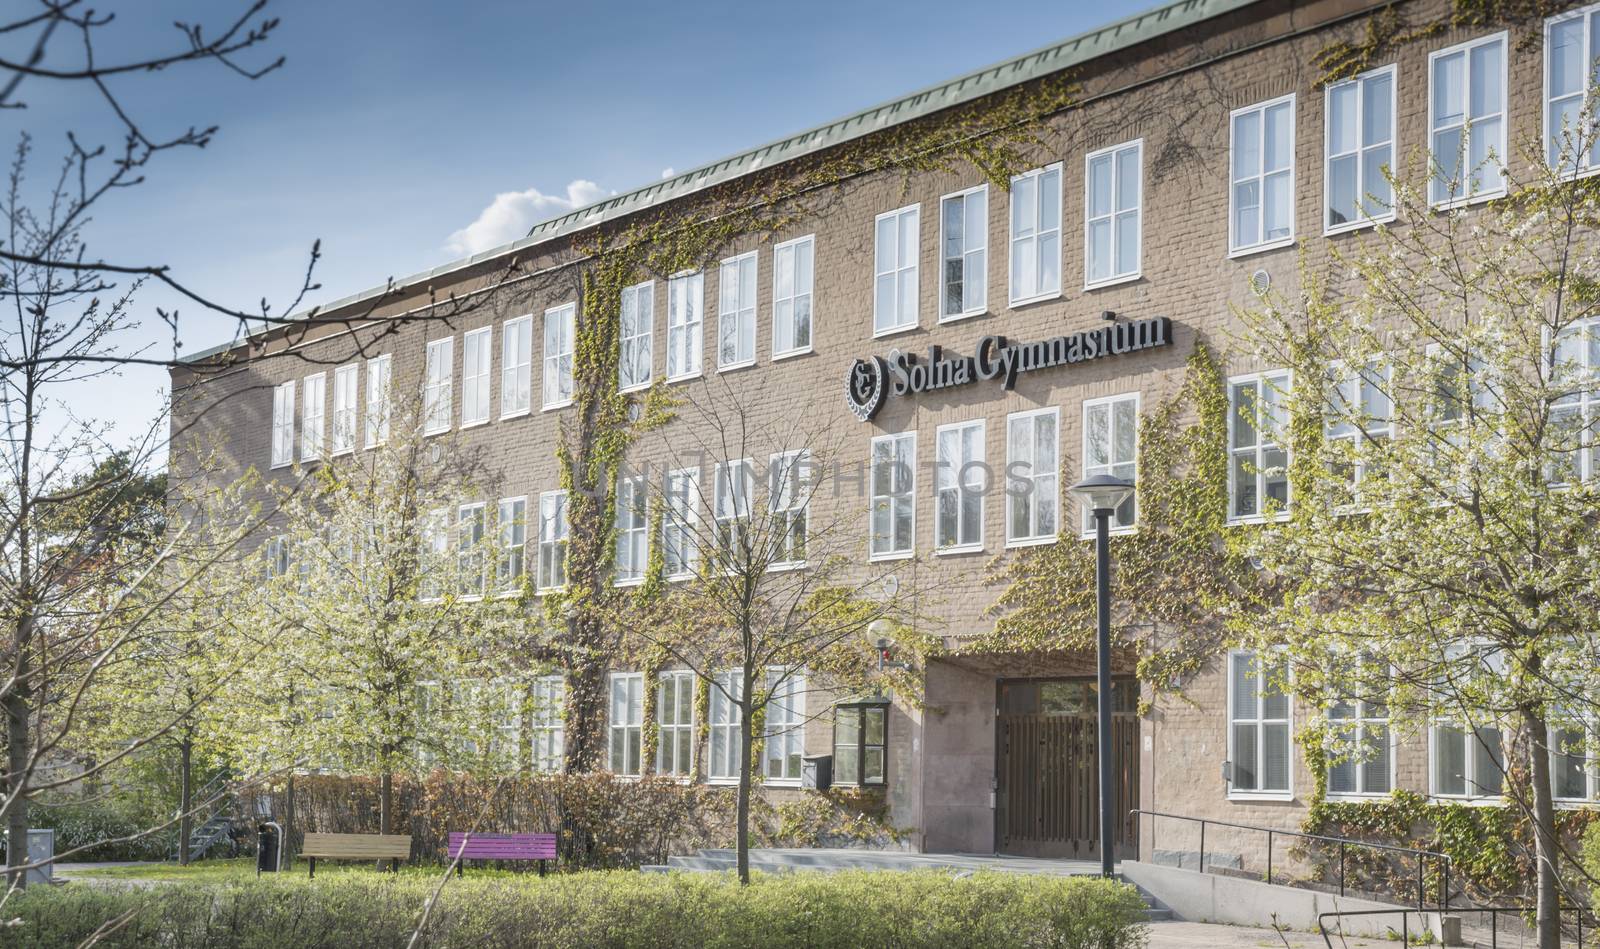 Exterior Solna Gymnasium highschool Sweden in May, Solna, Stockholm, Sweden